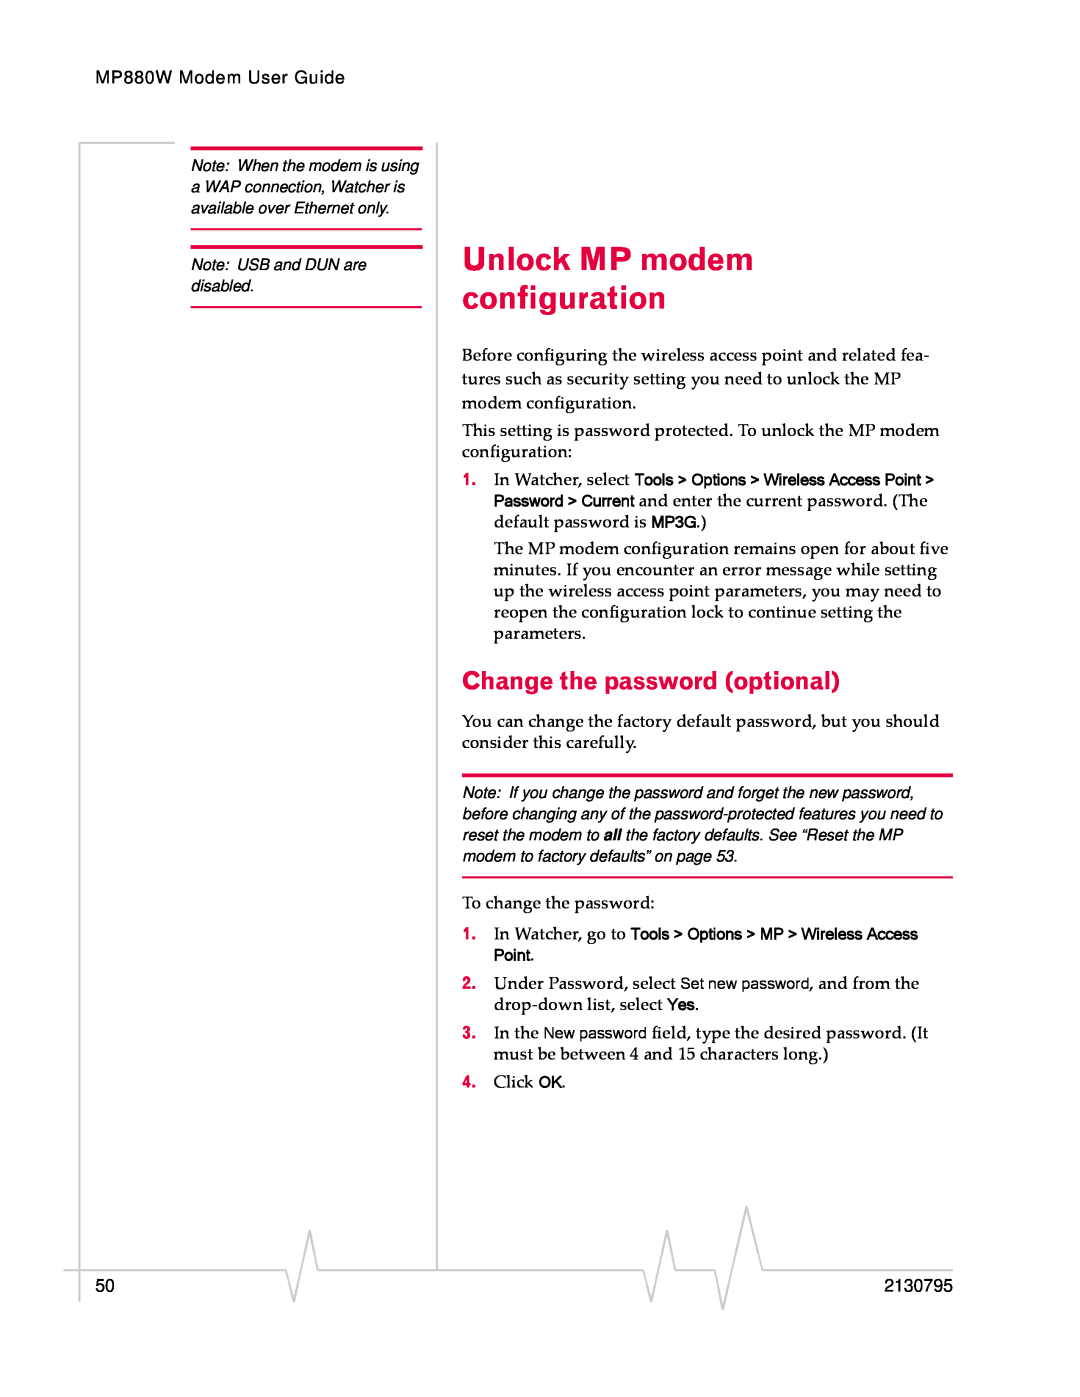 Sierra Wireless MP 880W manual Unlock MP modem configuration, Change the password optional 